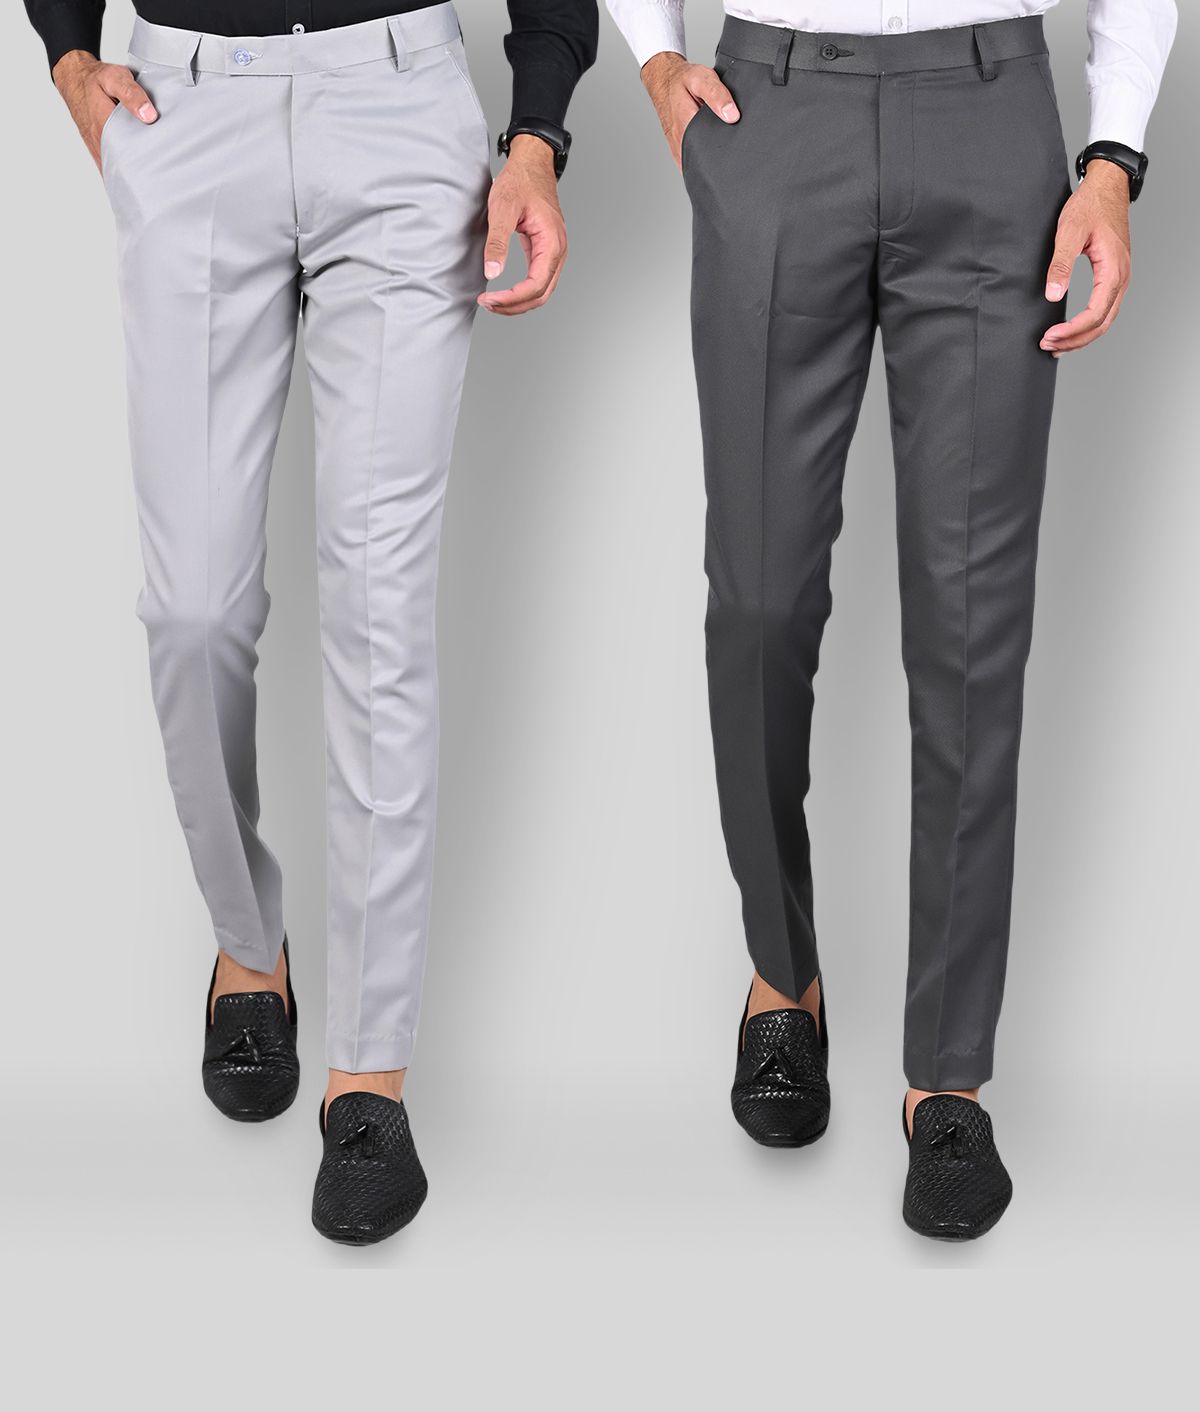     			MANCREW - Dark Grey Polycotton Slim - Fit Men's Formal Pants ( Pack of 2 )